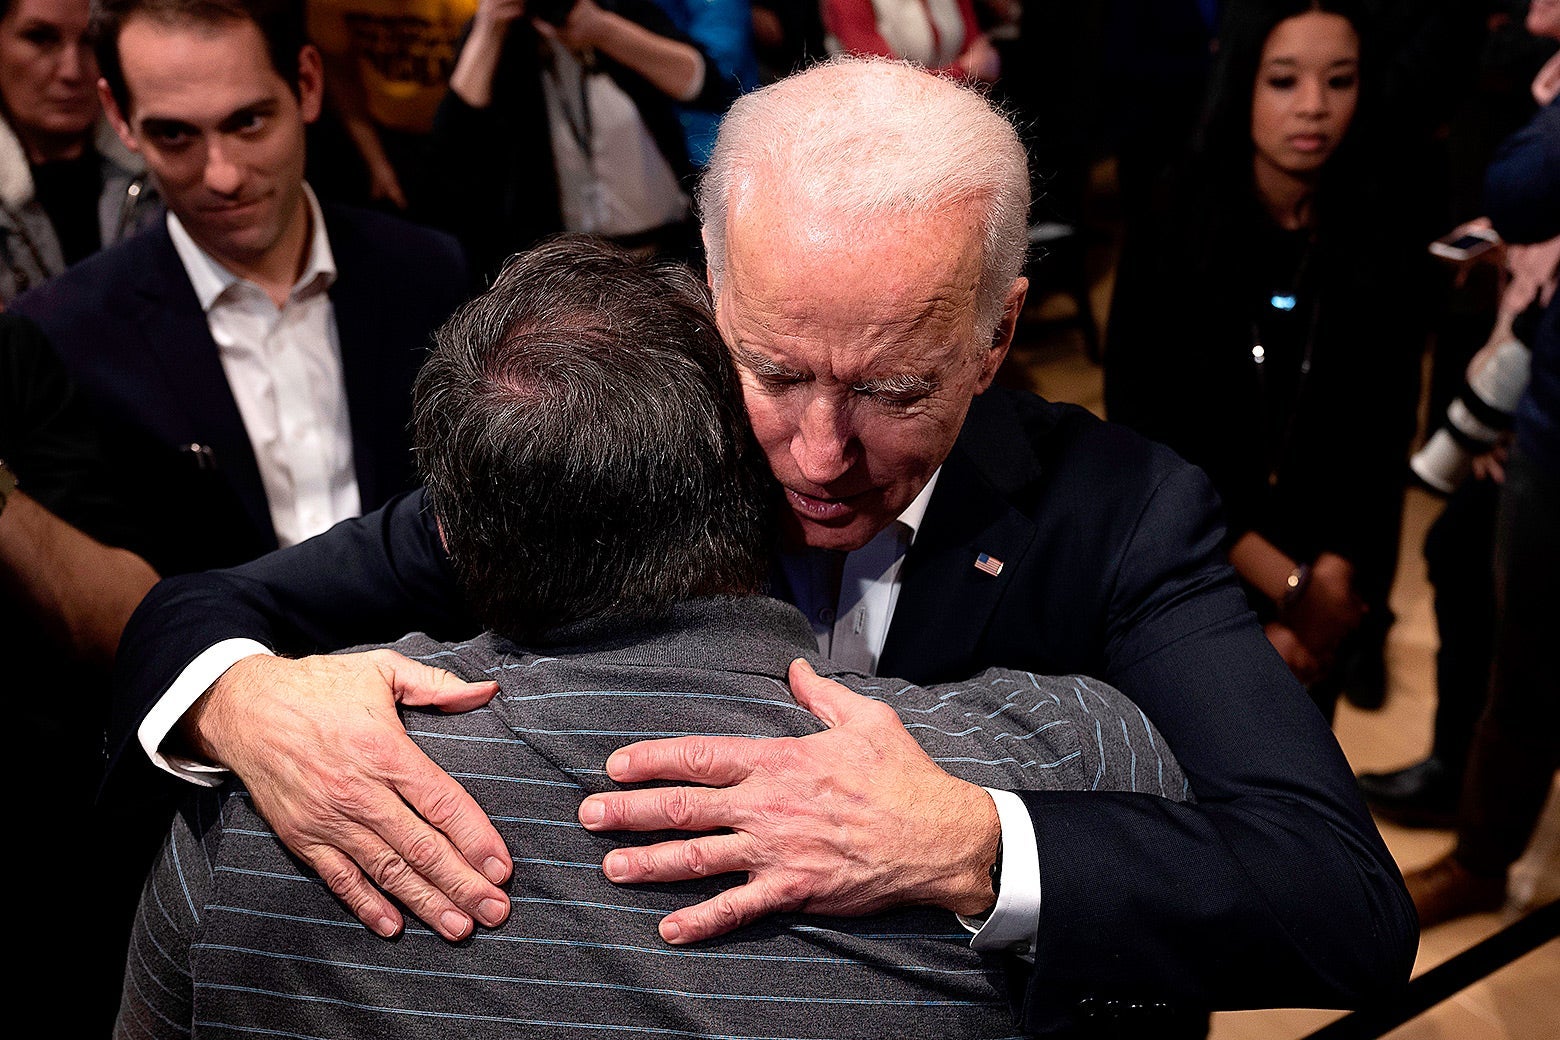 Joe Biden hugs a supporter during a town hall meeting in Newton, Iowa, on January 30, 2020.